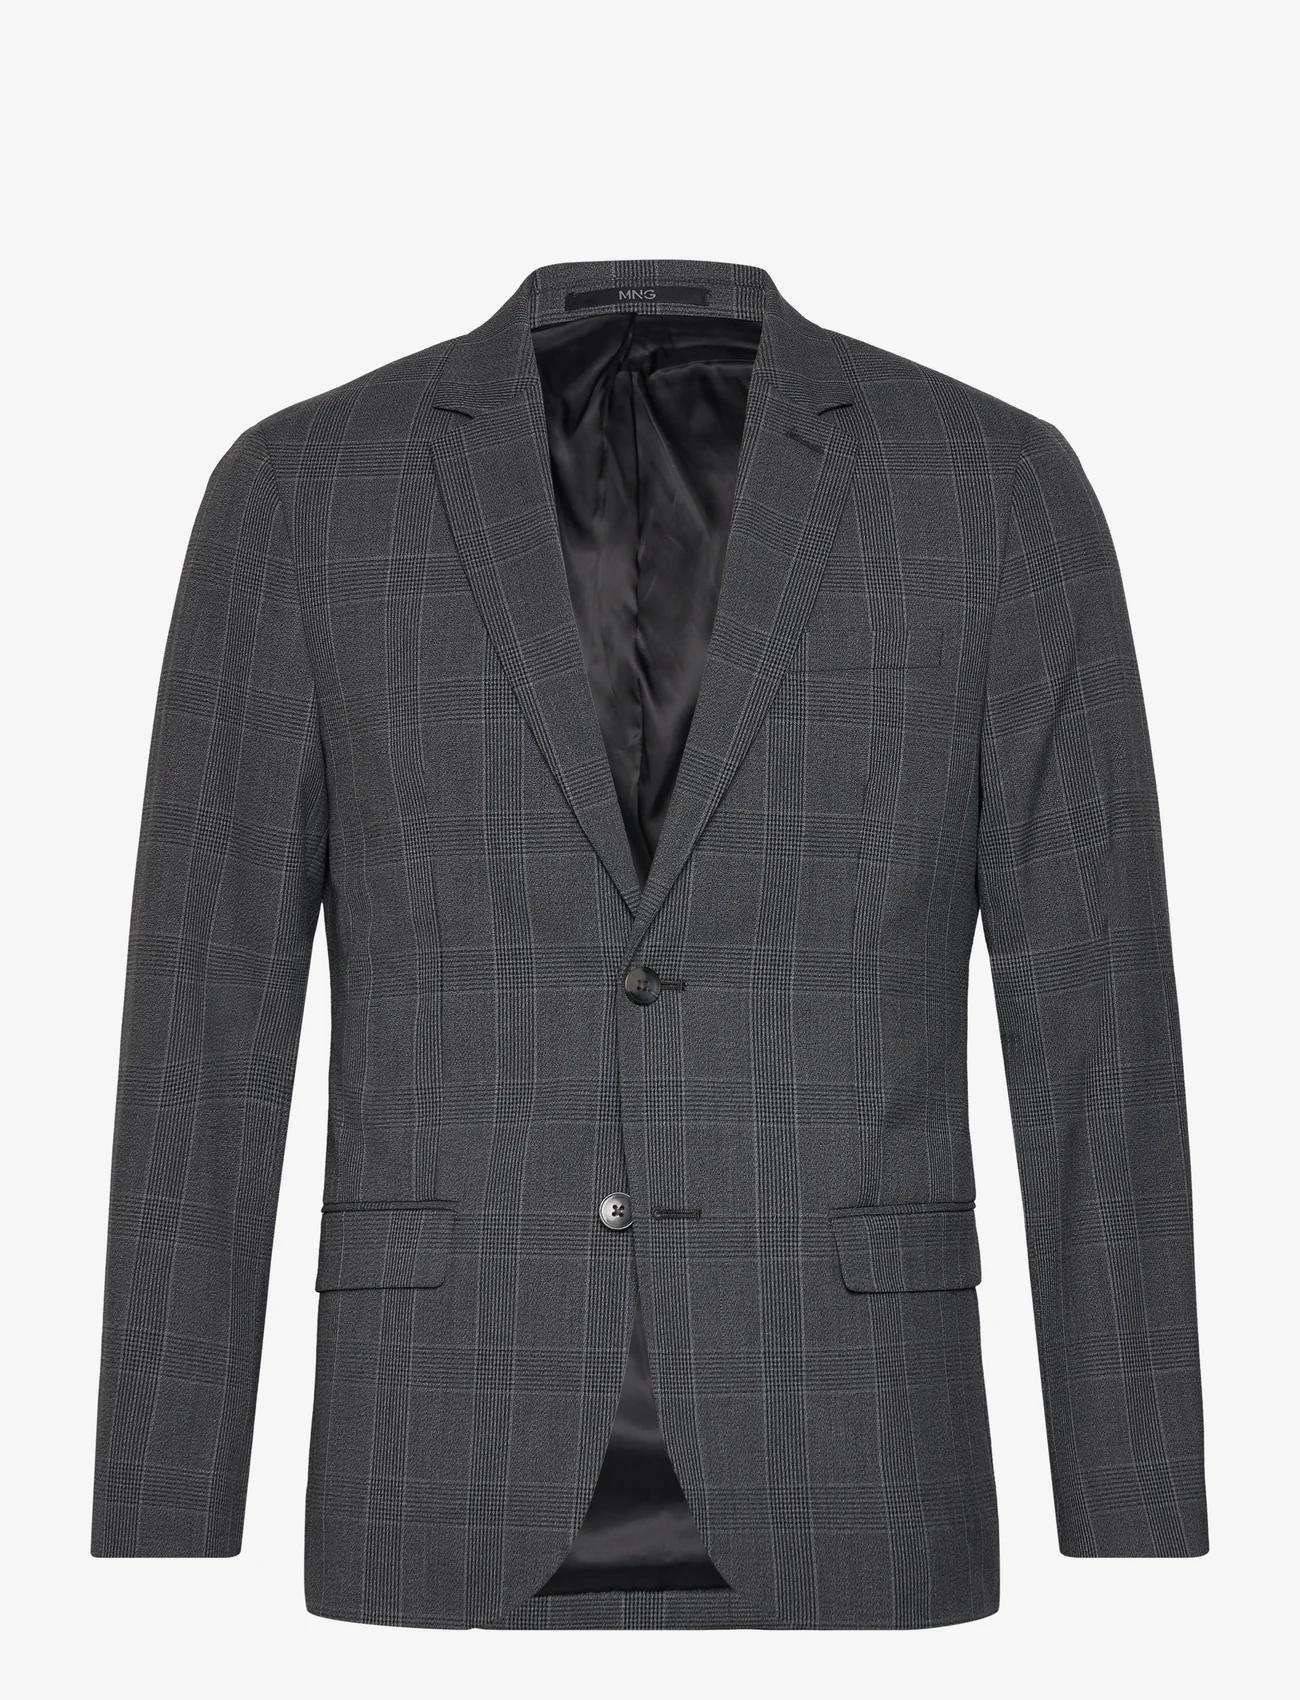 Mango - Super slim-fit check suit jacket - kaksiriviset bleiserit - medium grey - 0